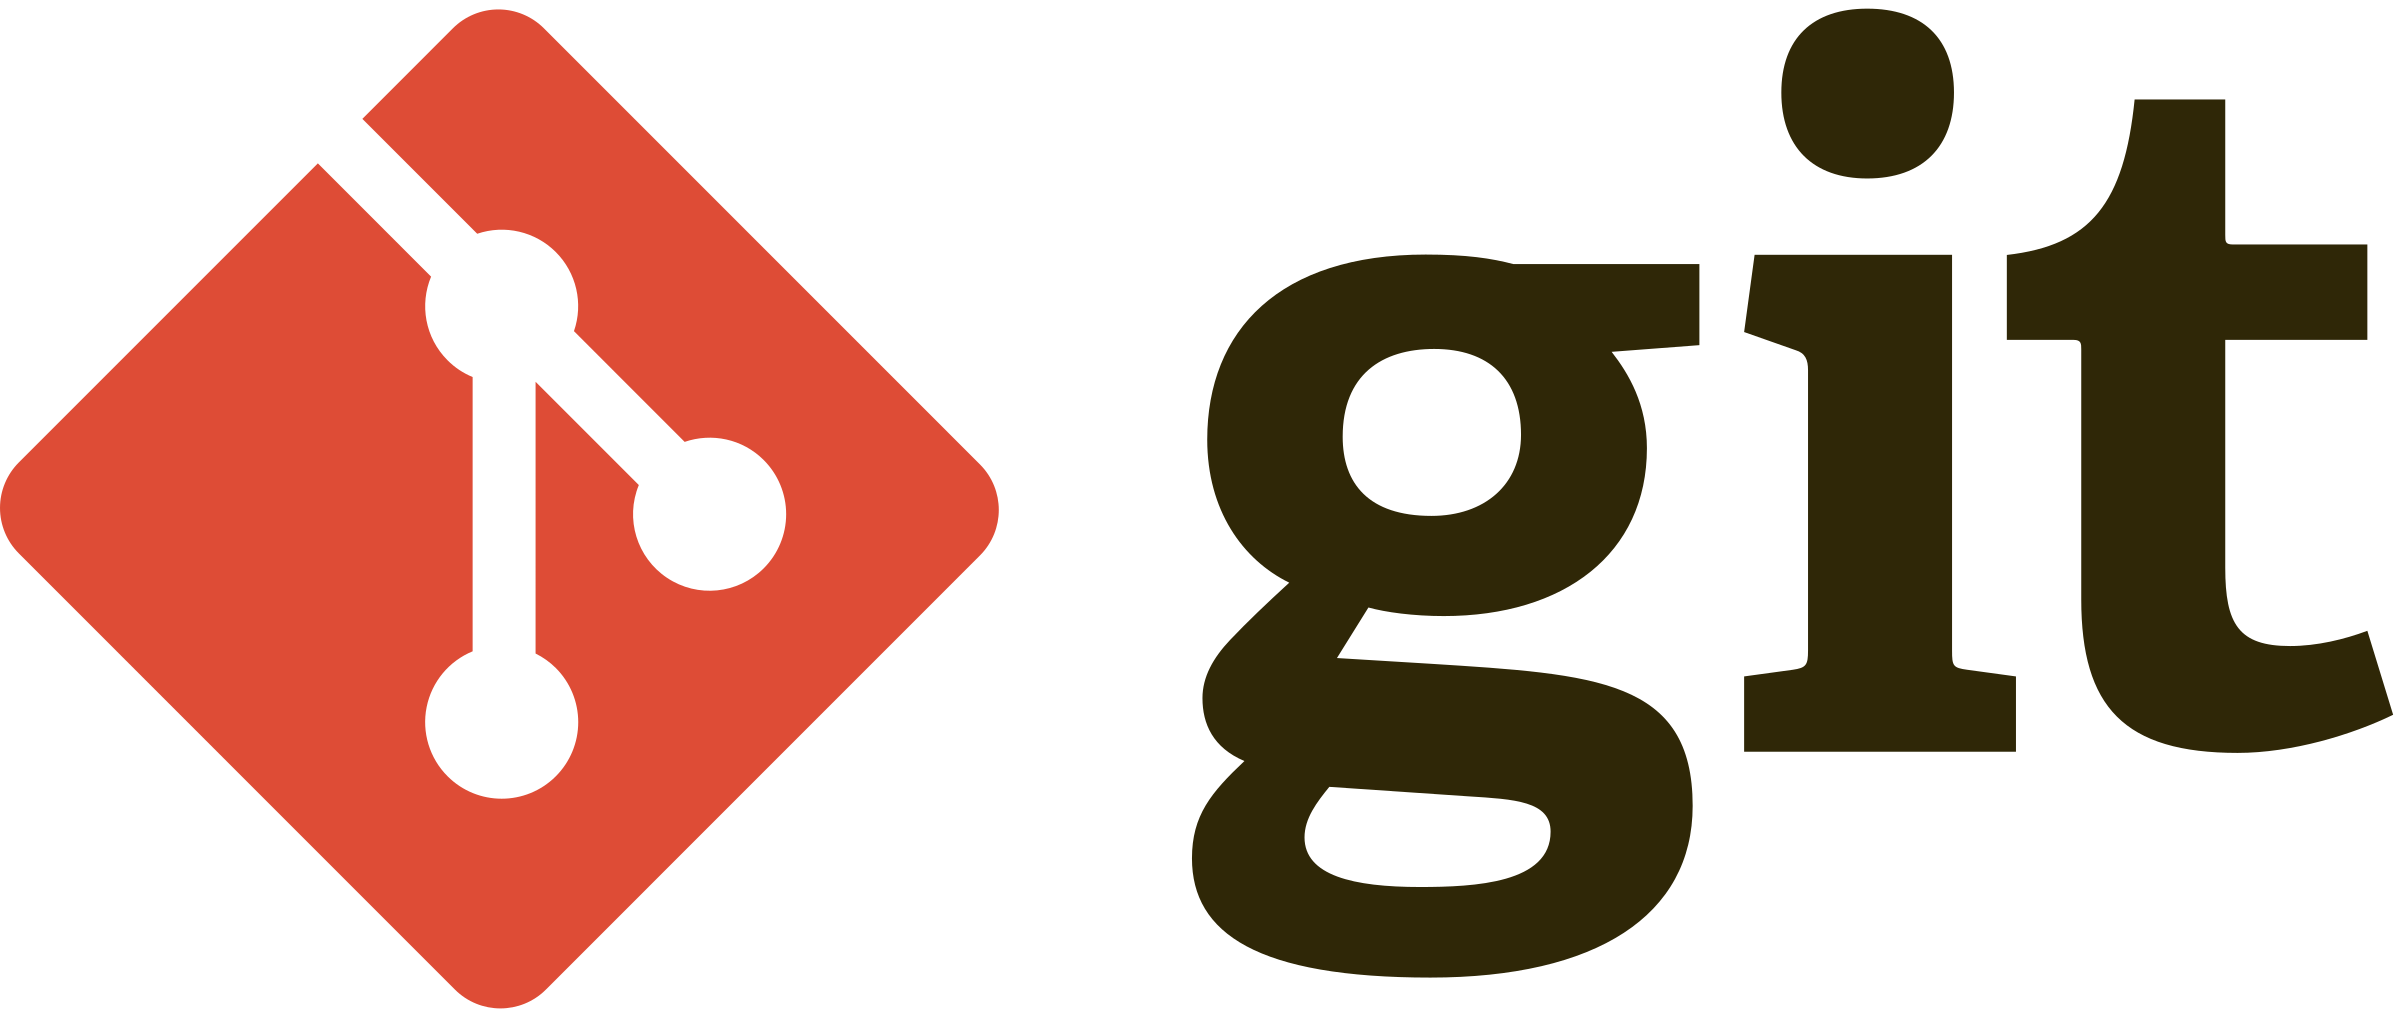 Github Logo Download Transparent PNG Image